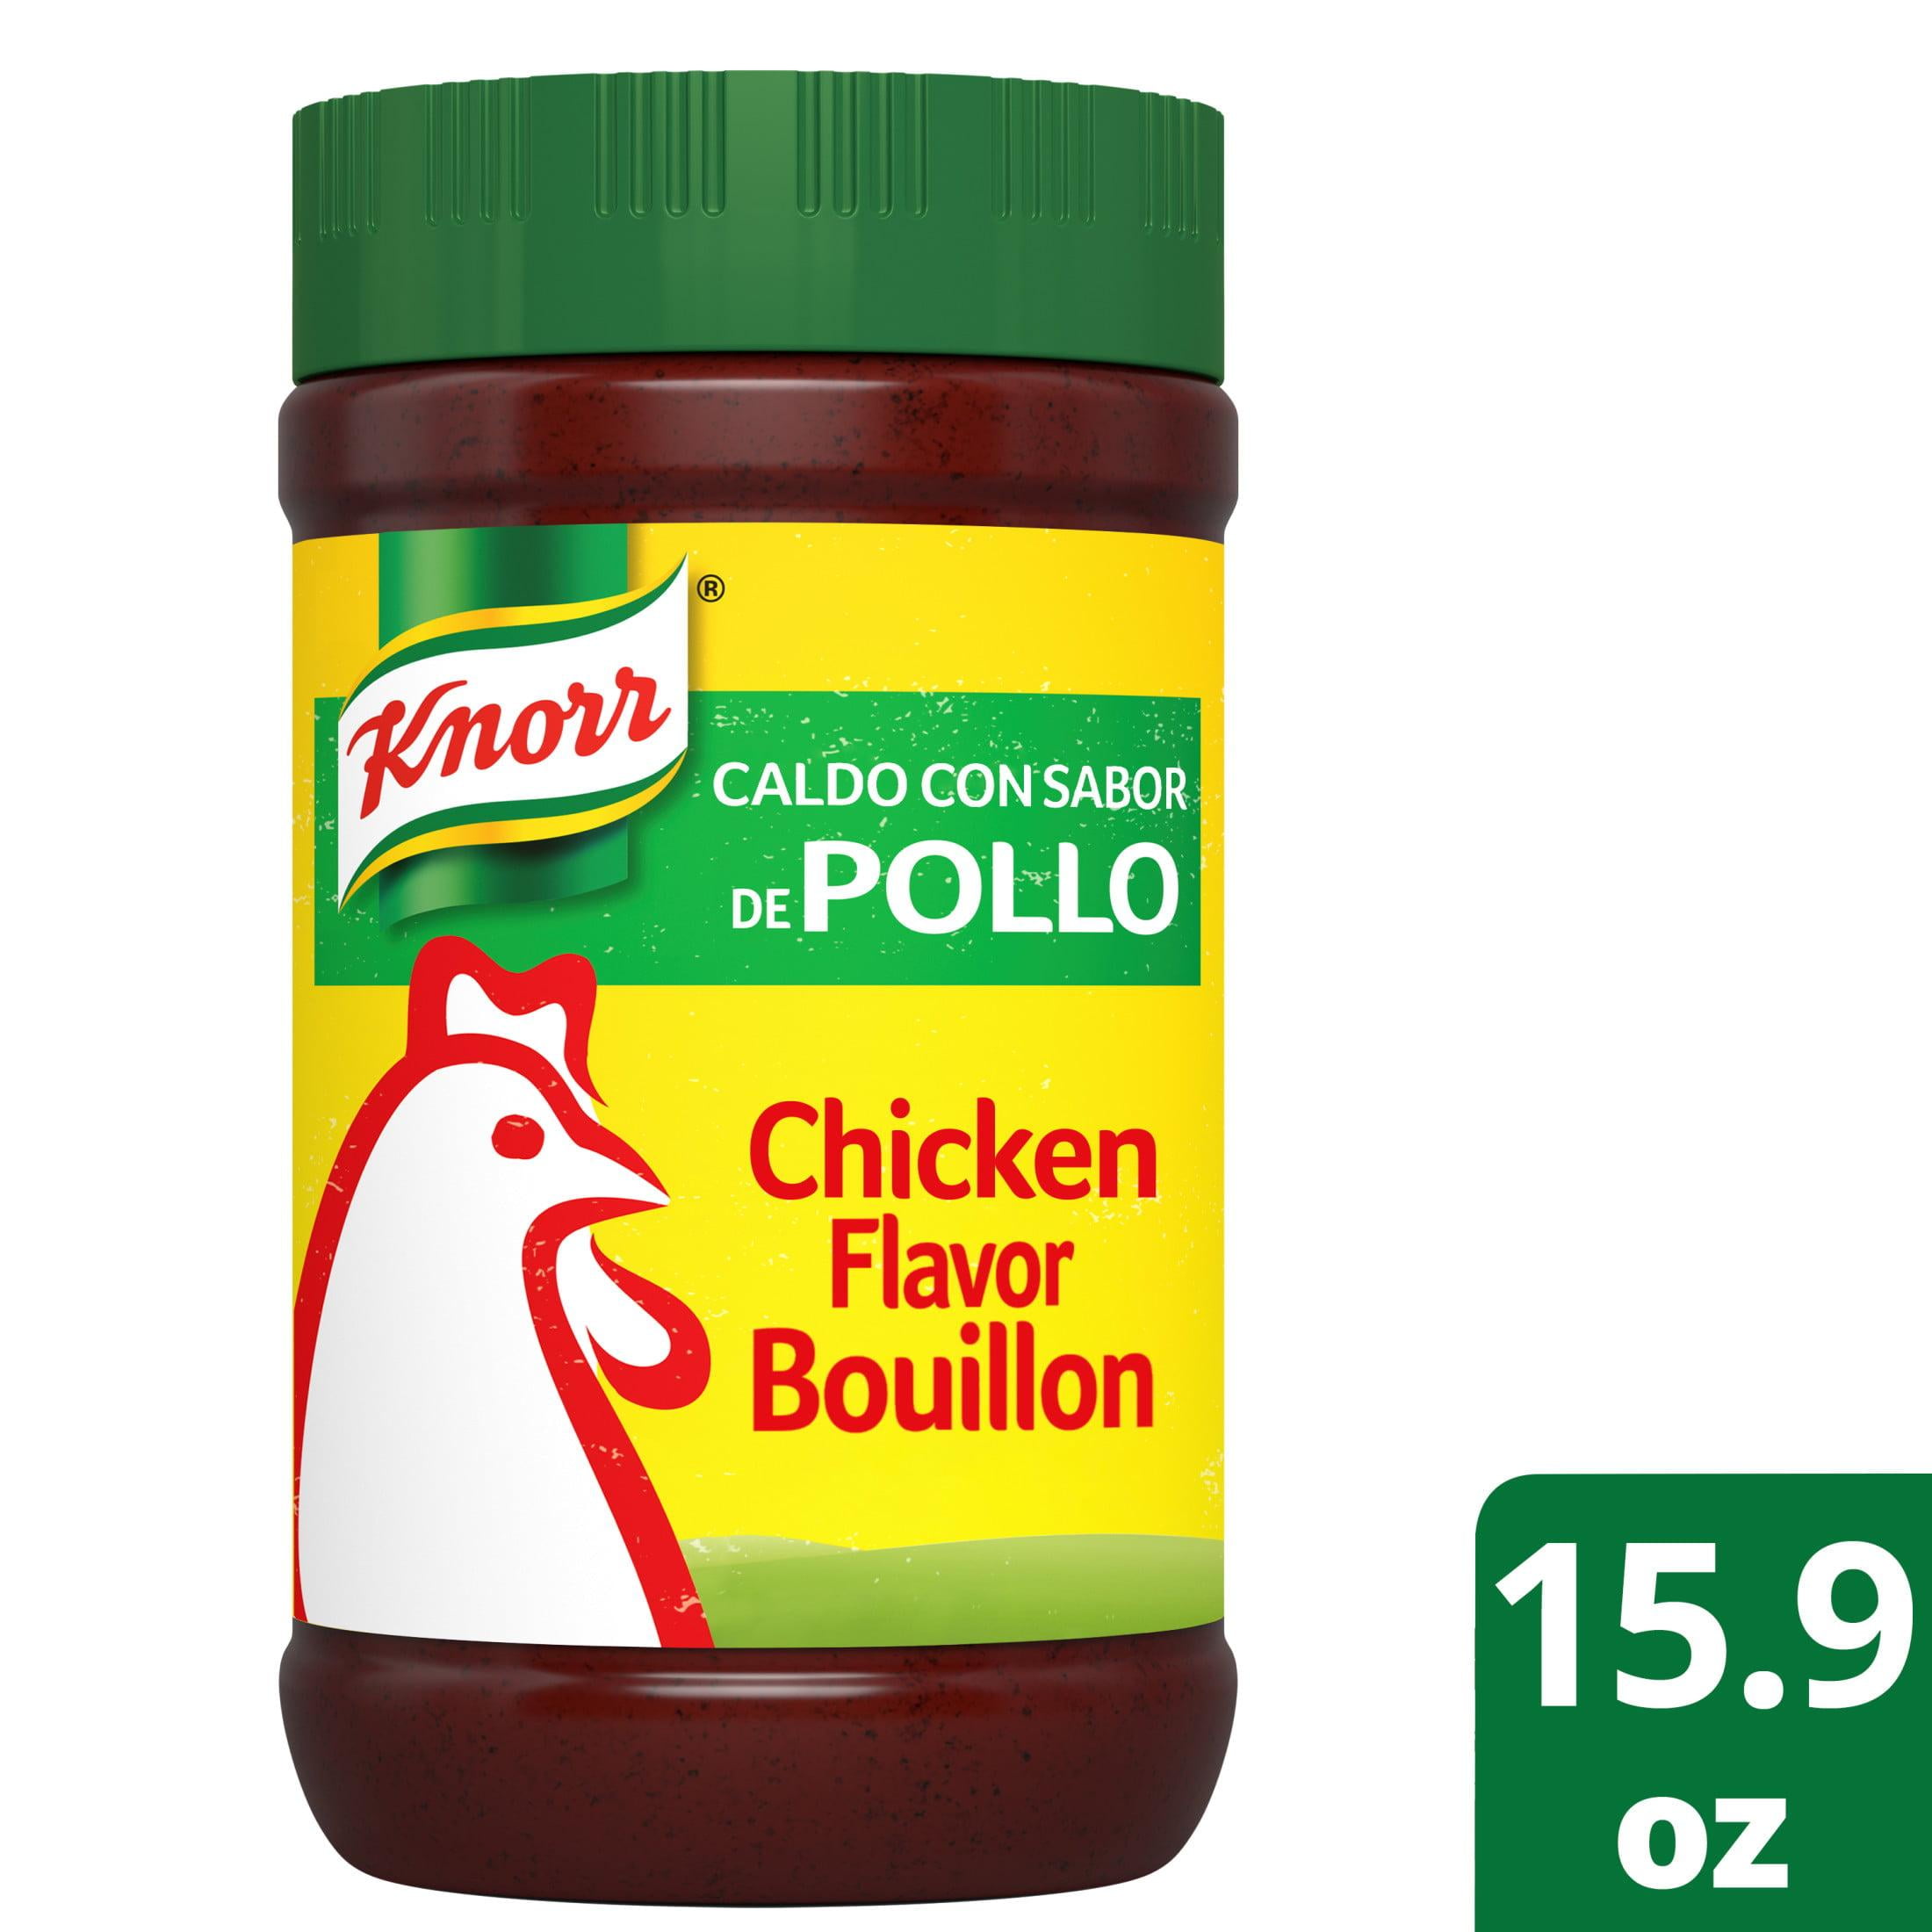 Knorr (M-) de pollo 15.9 Oz, 12 CT